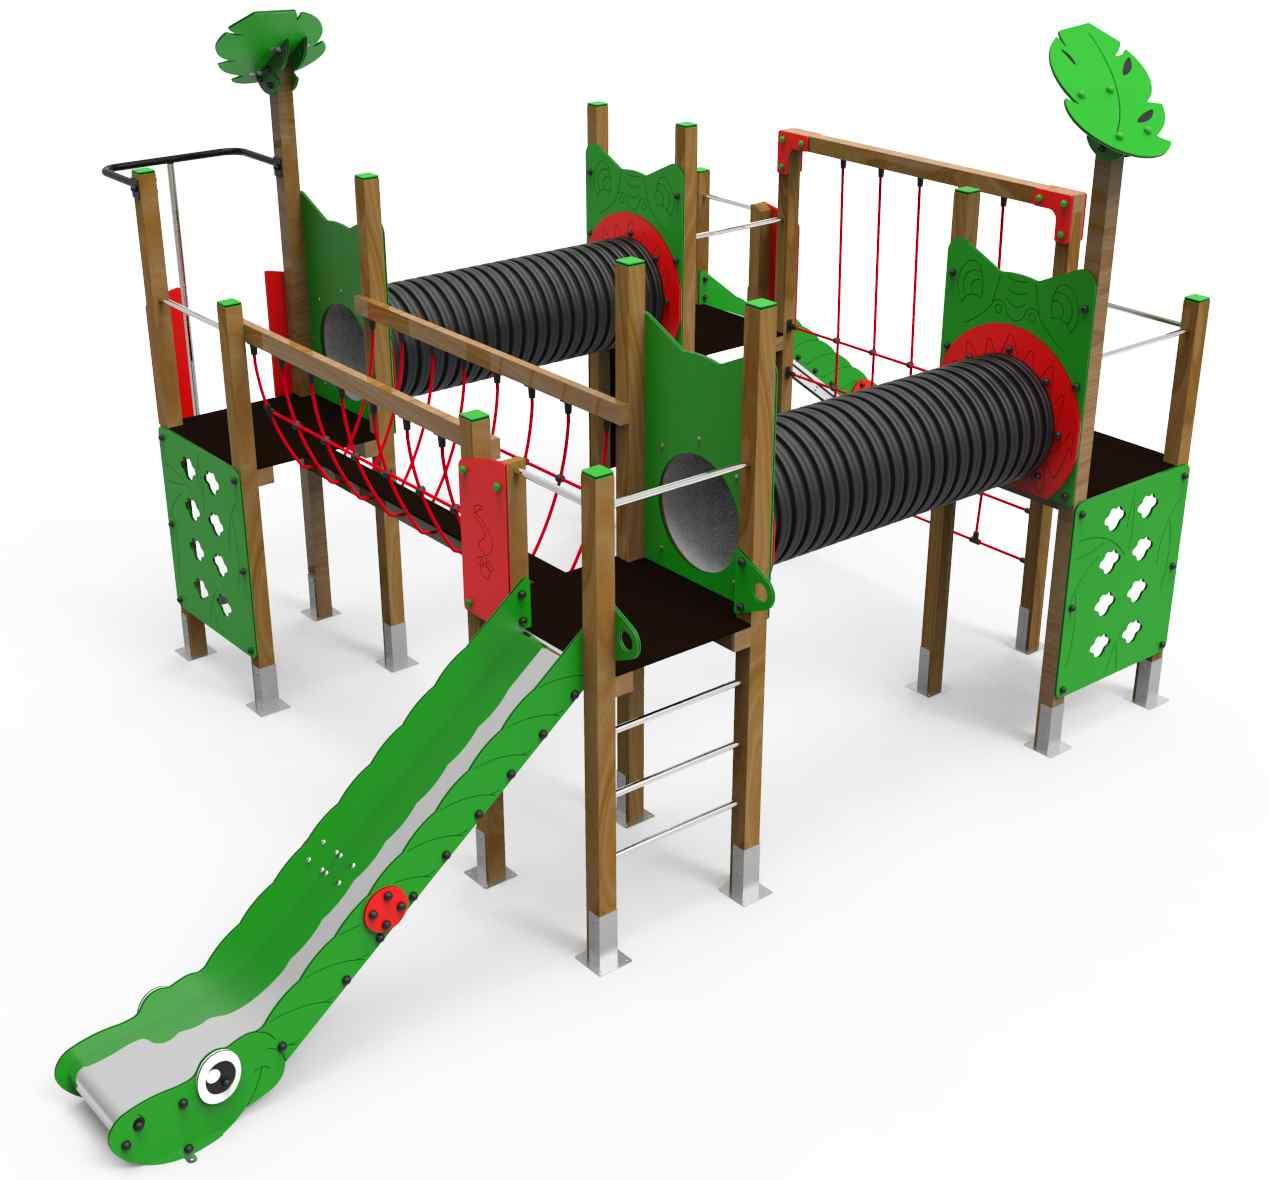 Parques infantiles de exterior: ¿Cuáles son sus beneficios?